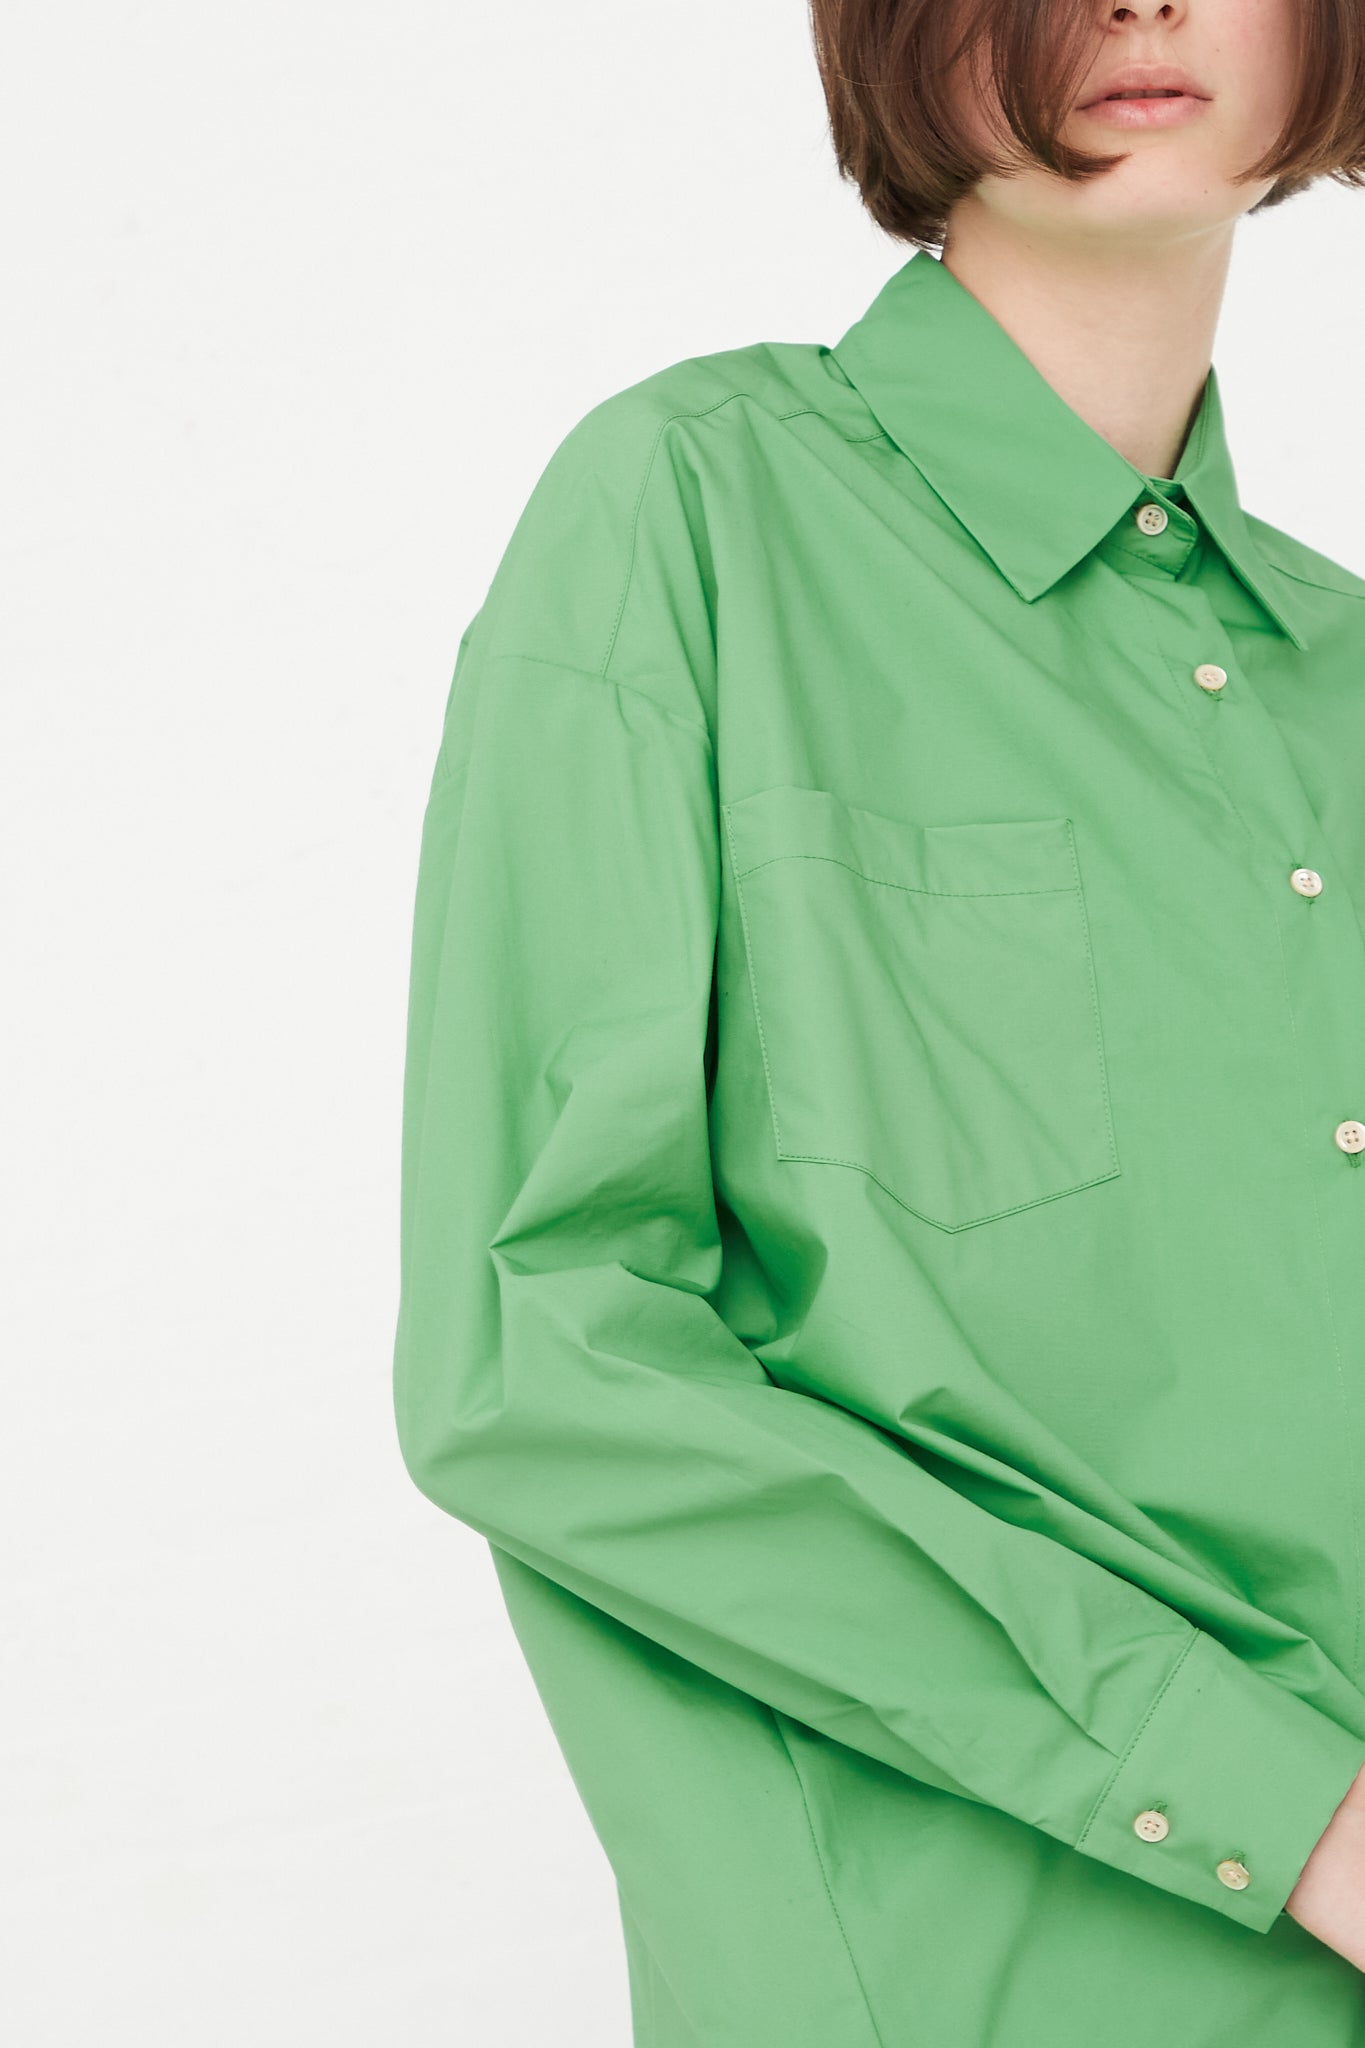 Caron Callahan - Francine Shirt in Jade Poplin sleeve detail